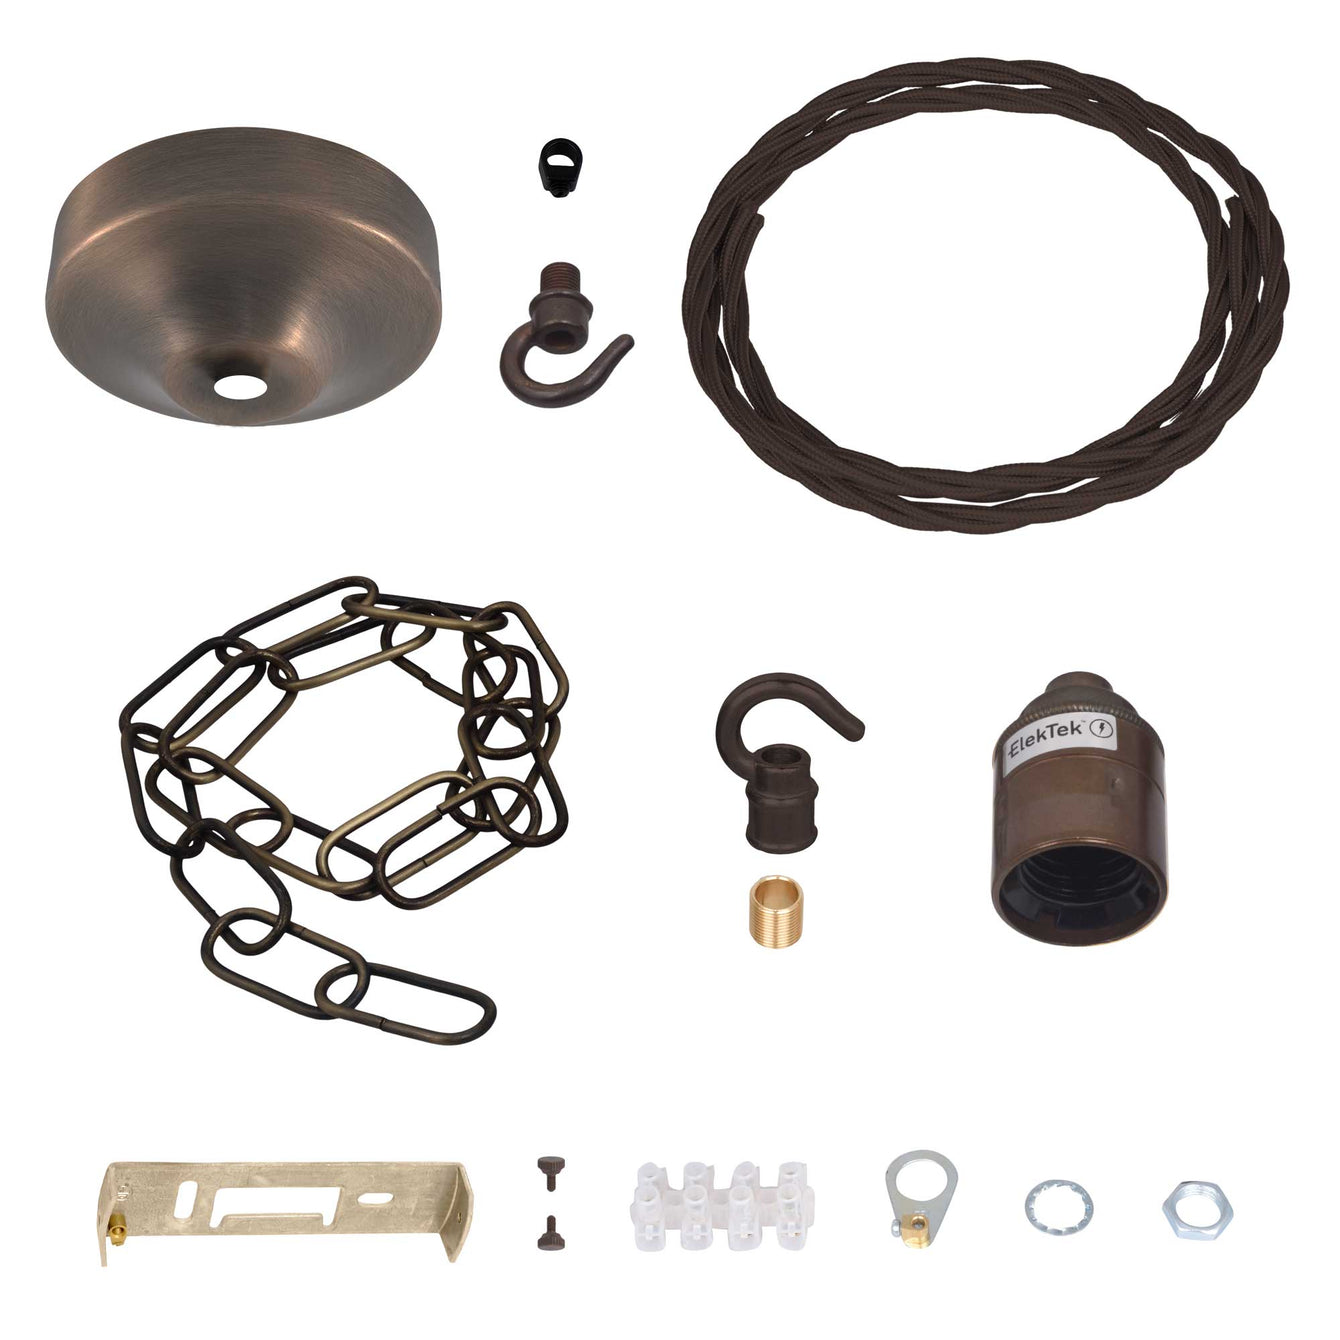 ElekTek Premium Pendant Light Kit DIY 100mm Convex Ceiling Rose, Chain, Twisted Flex and Lamp Holder E27 Plain Hook - Buy It Better Nickel (Round Flex)